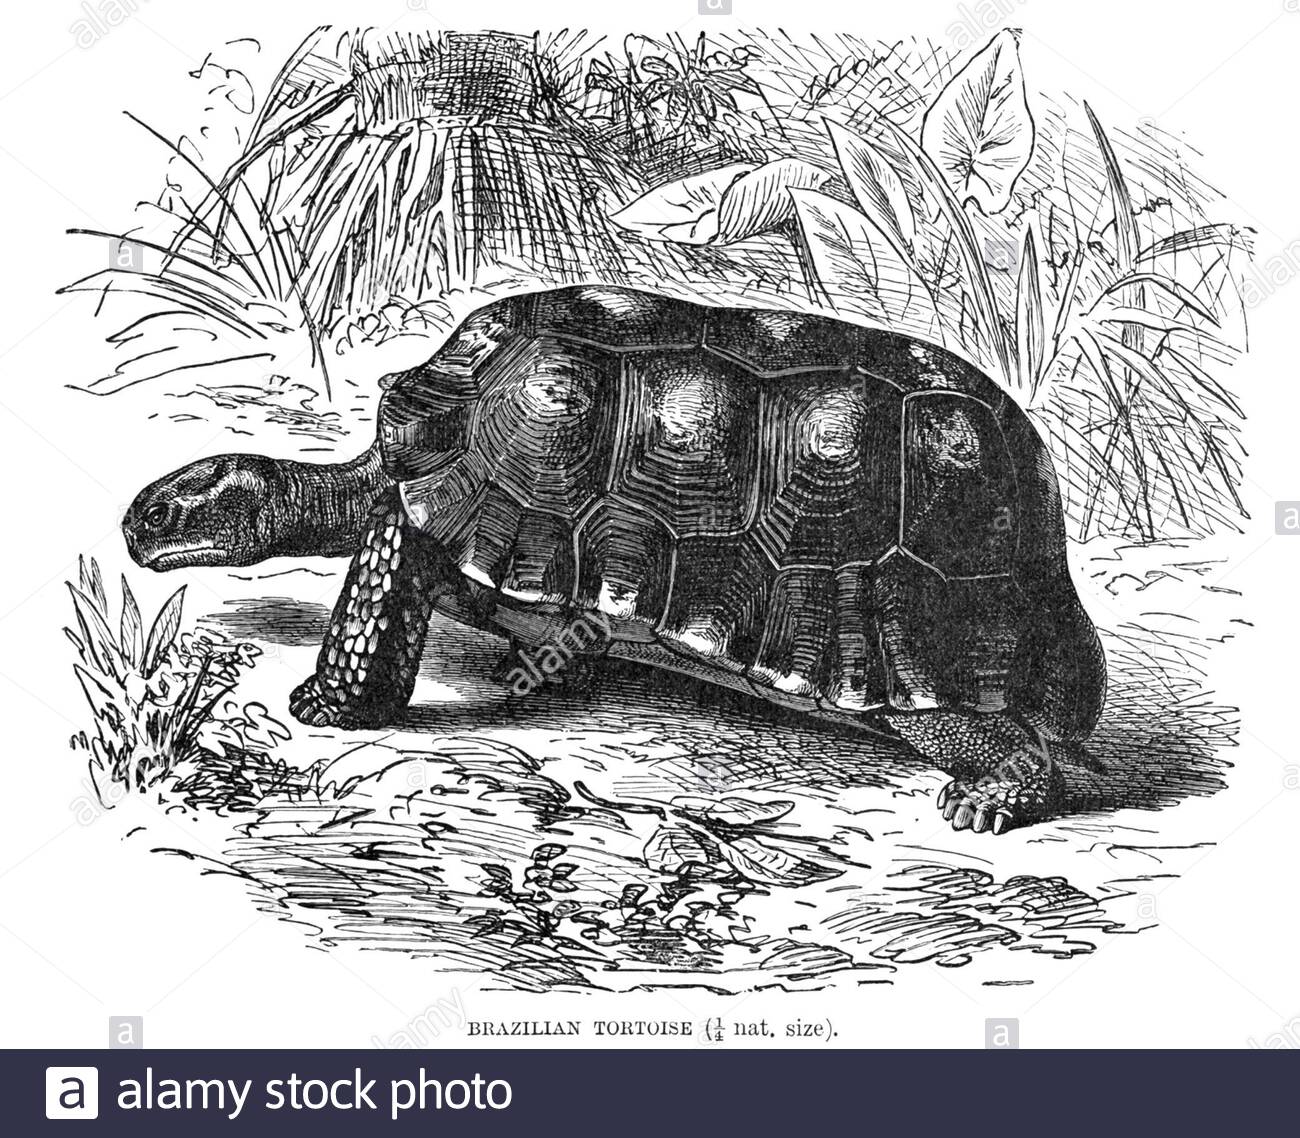 Brazilian Tortoise (Yellow-footed tortoise), vintage illustration from 1896 Stock Photo